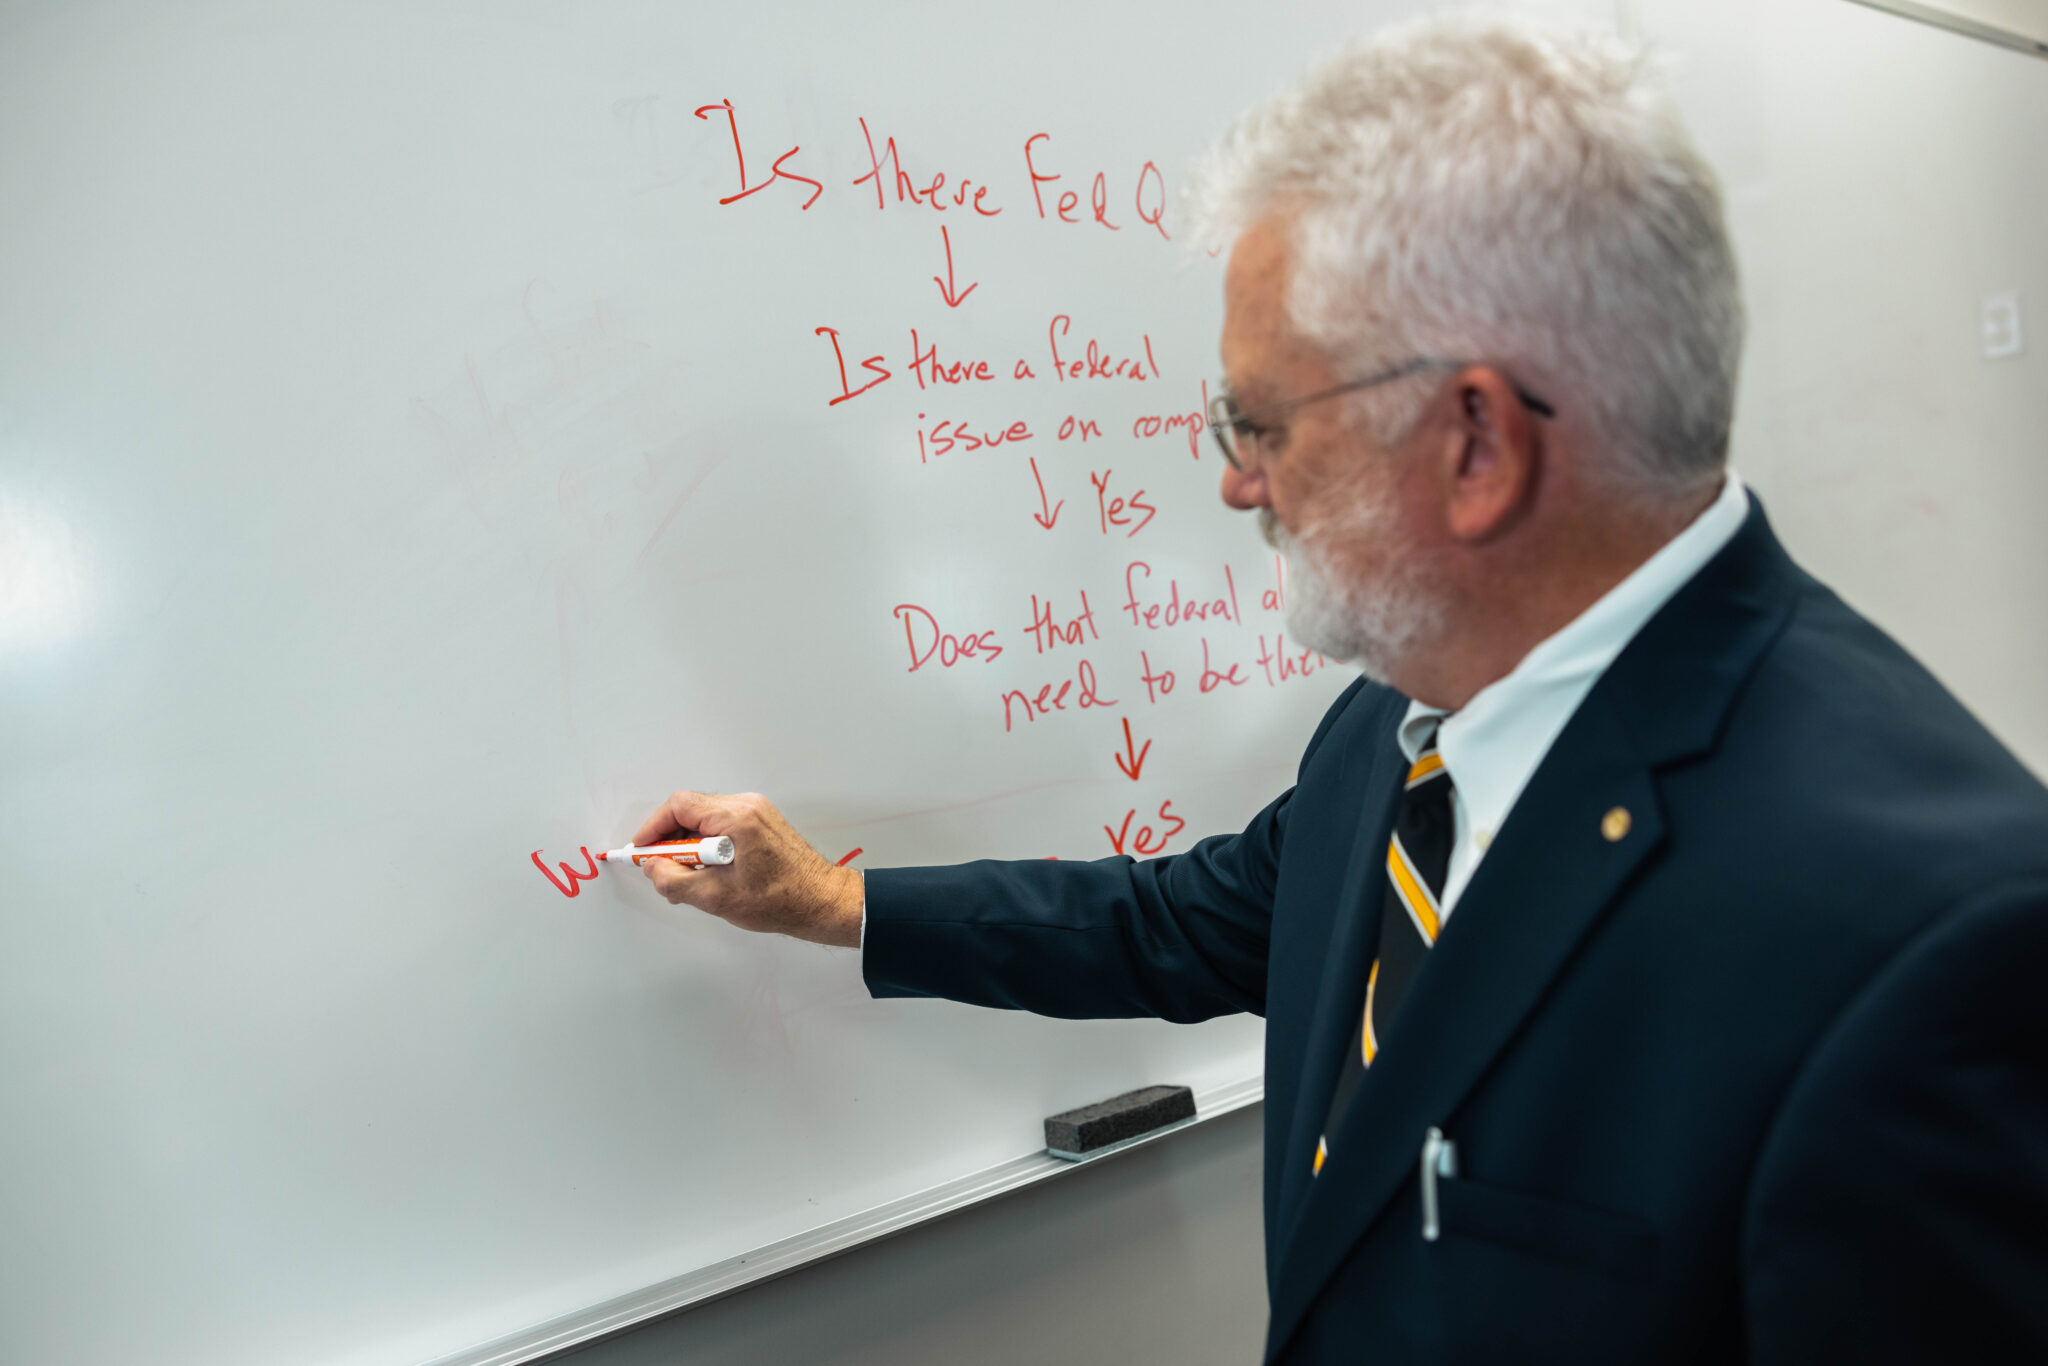 Professor writing on a dry erase board